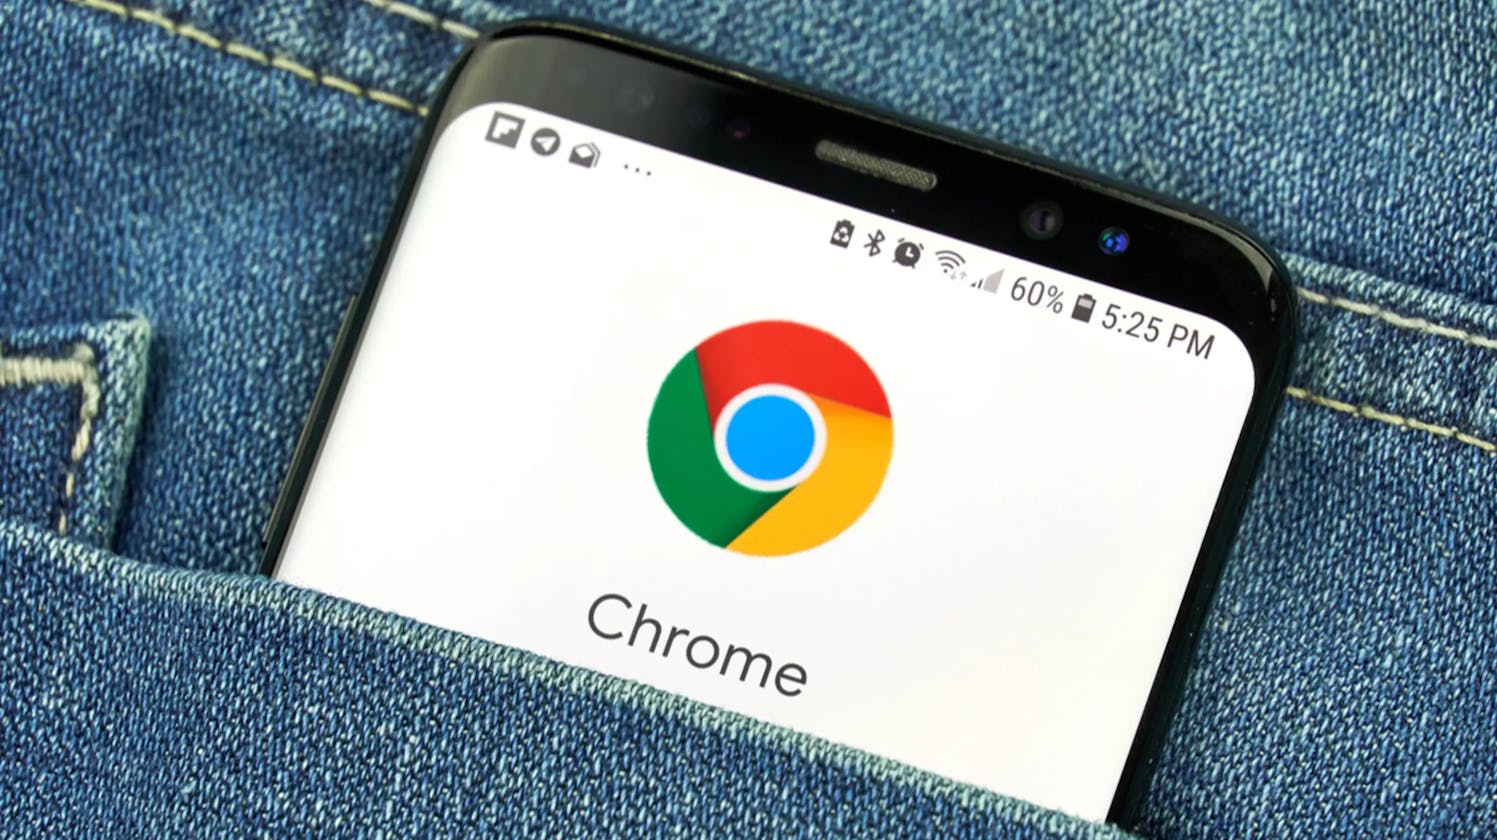 Google Chrome for mobile, A comprehensive guide